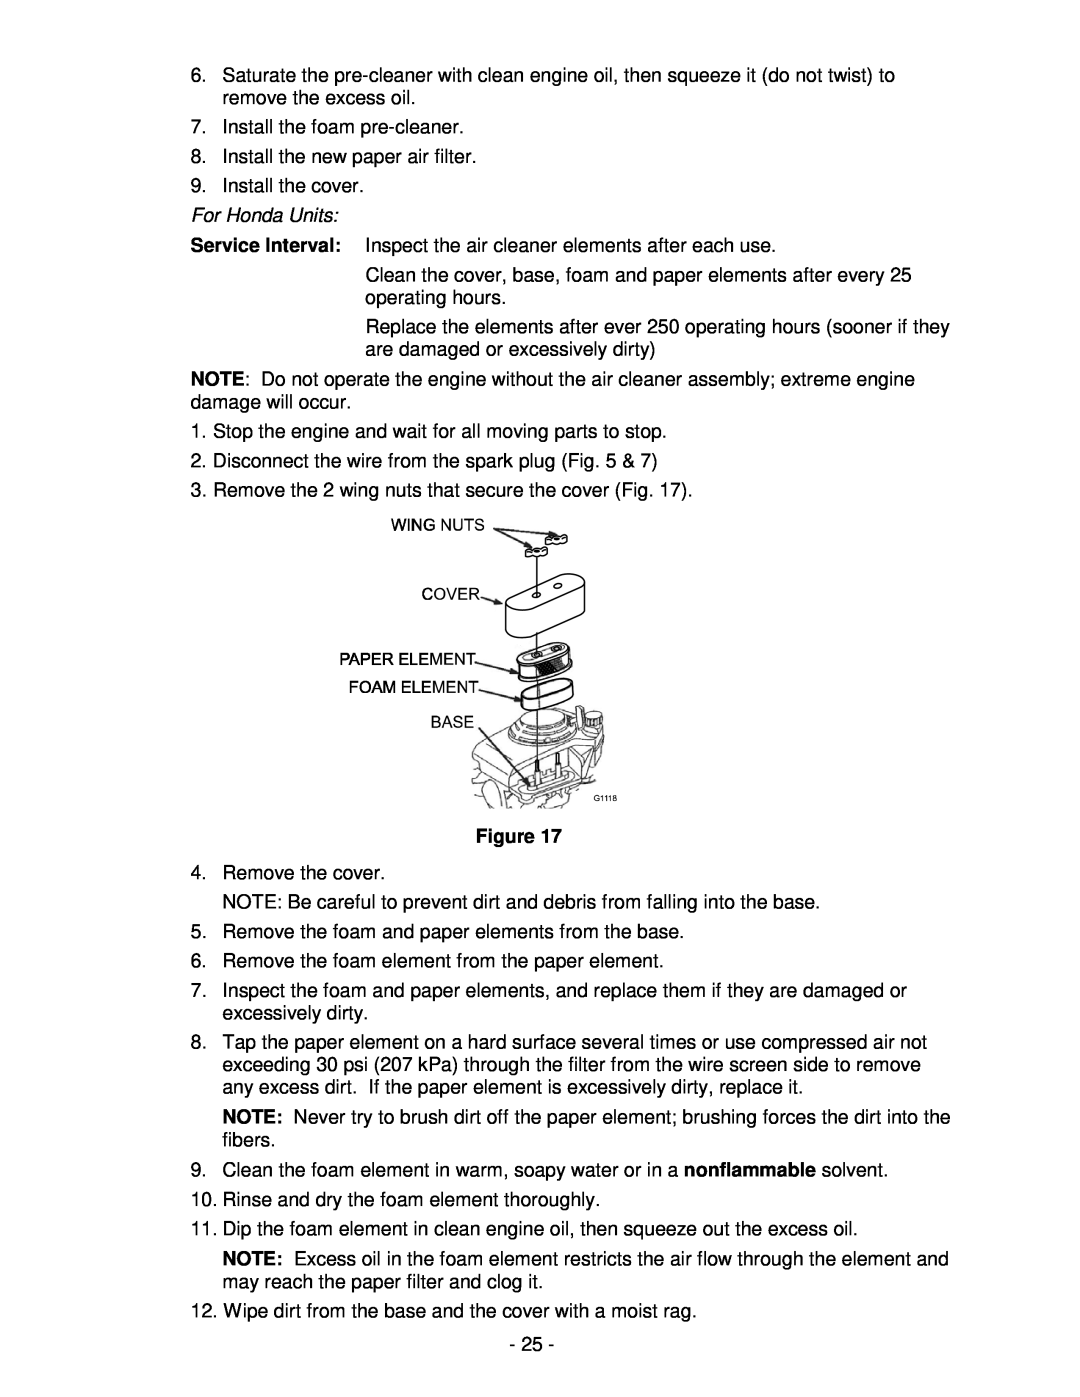 Honda Power Equipment metro 21 manual For Honda Units 